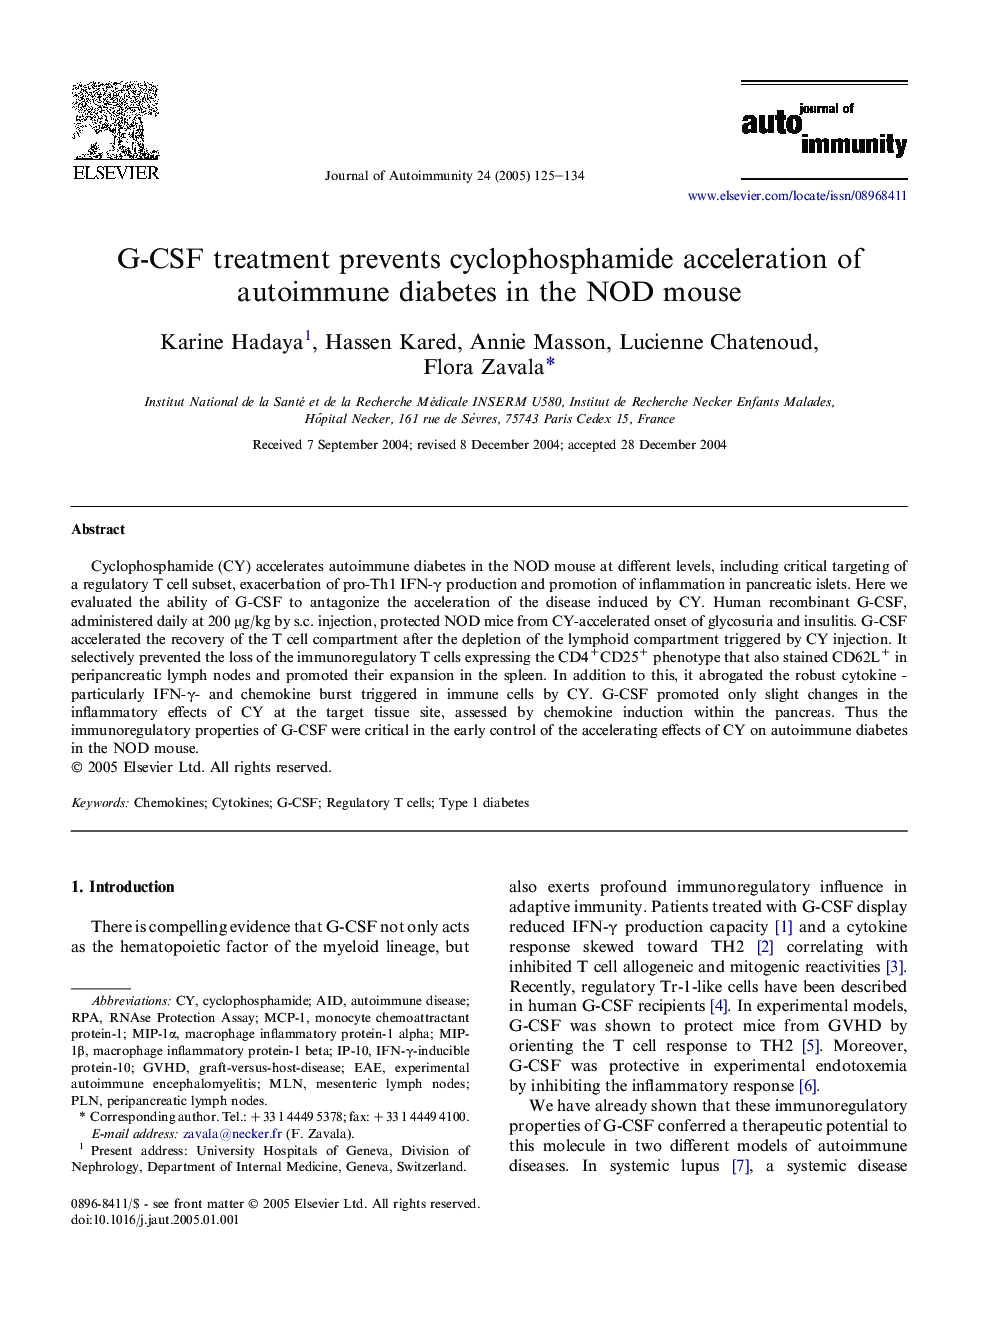 G-CSF treatment prevents cyclophosphamide acceleration of autoimmune diabetes in the NOD mouse